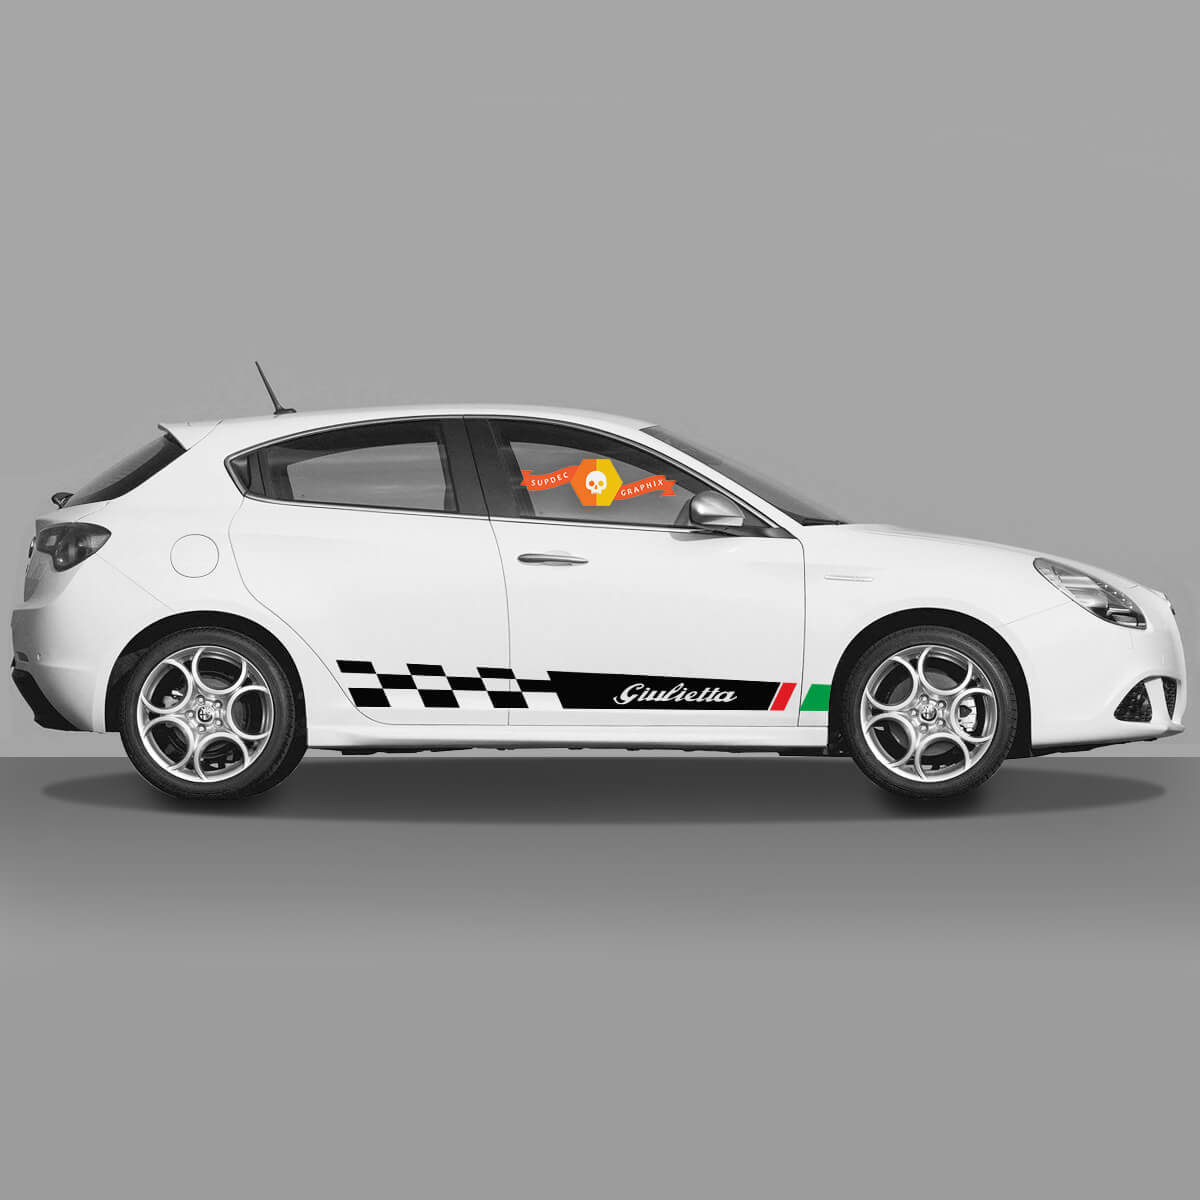 2x Alfa Romeo Giulietta decals Vinyl Graphics rocker panel Italy flag Start 2022
